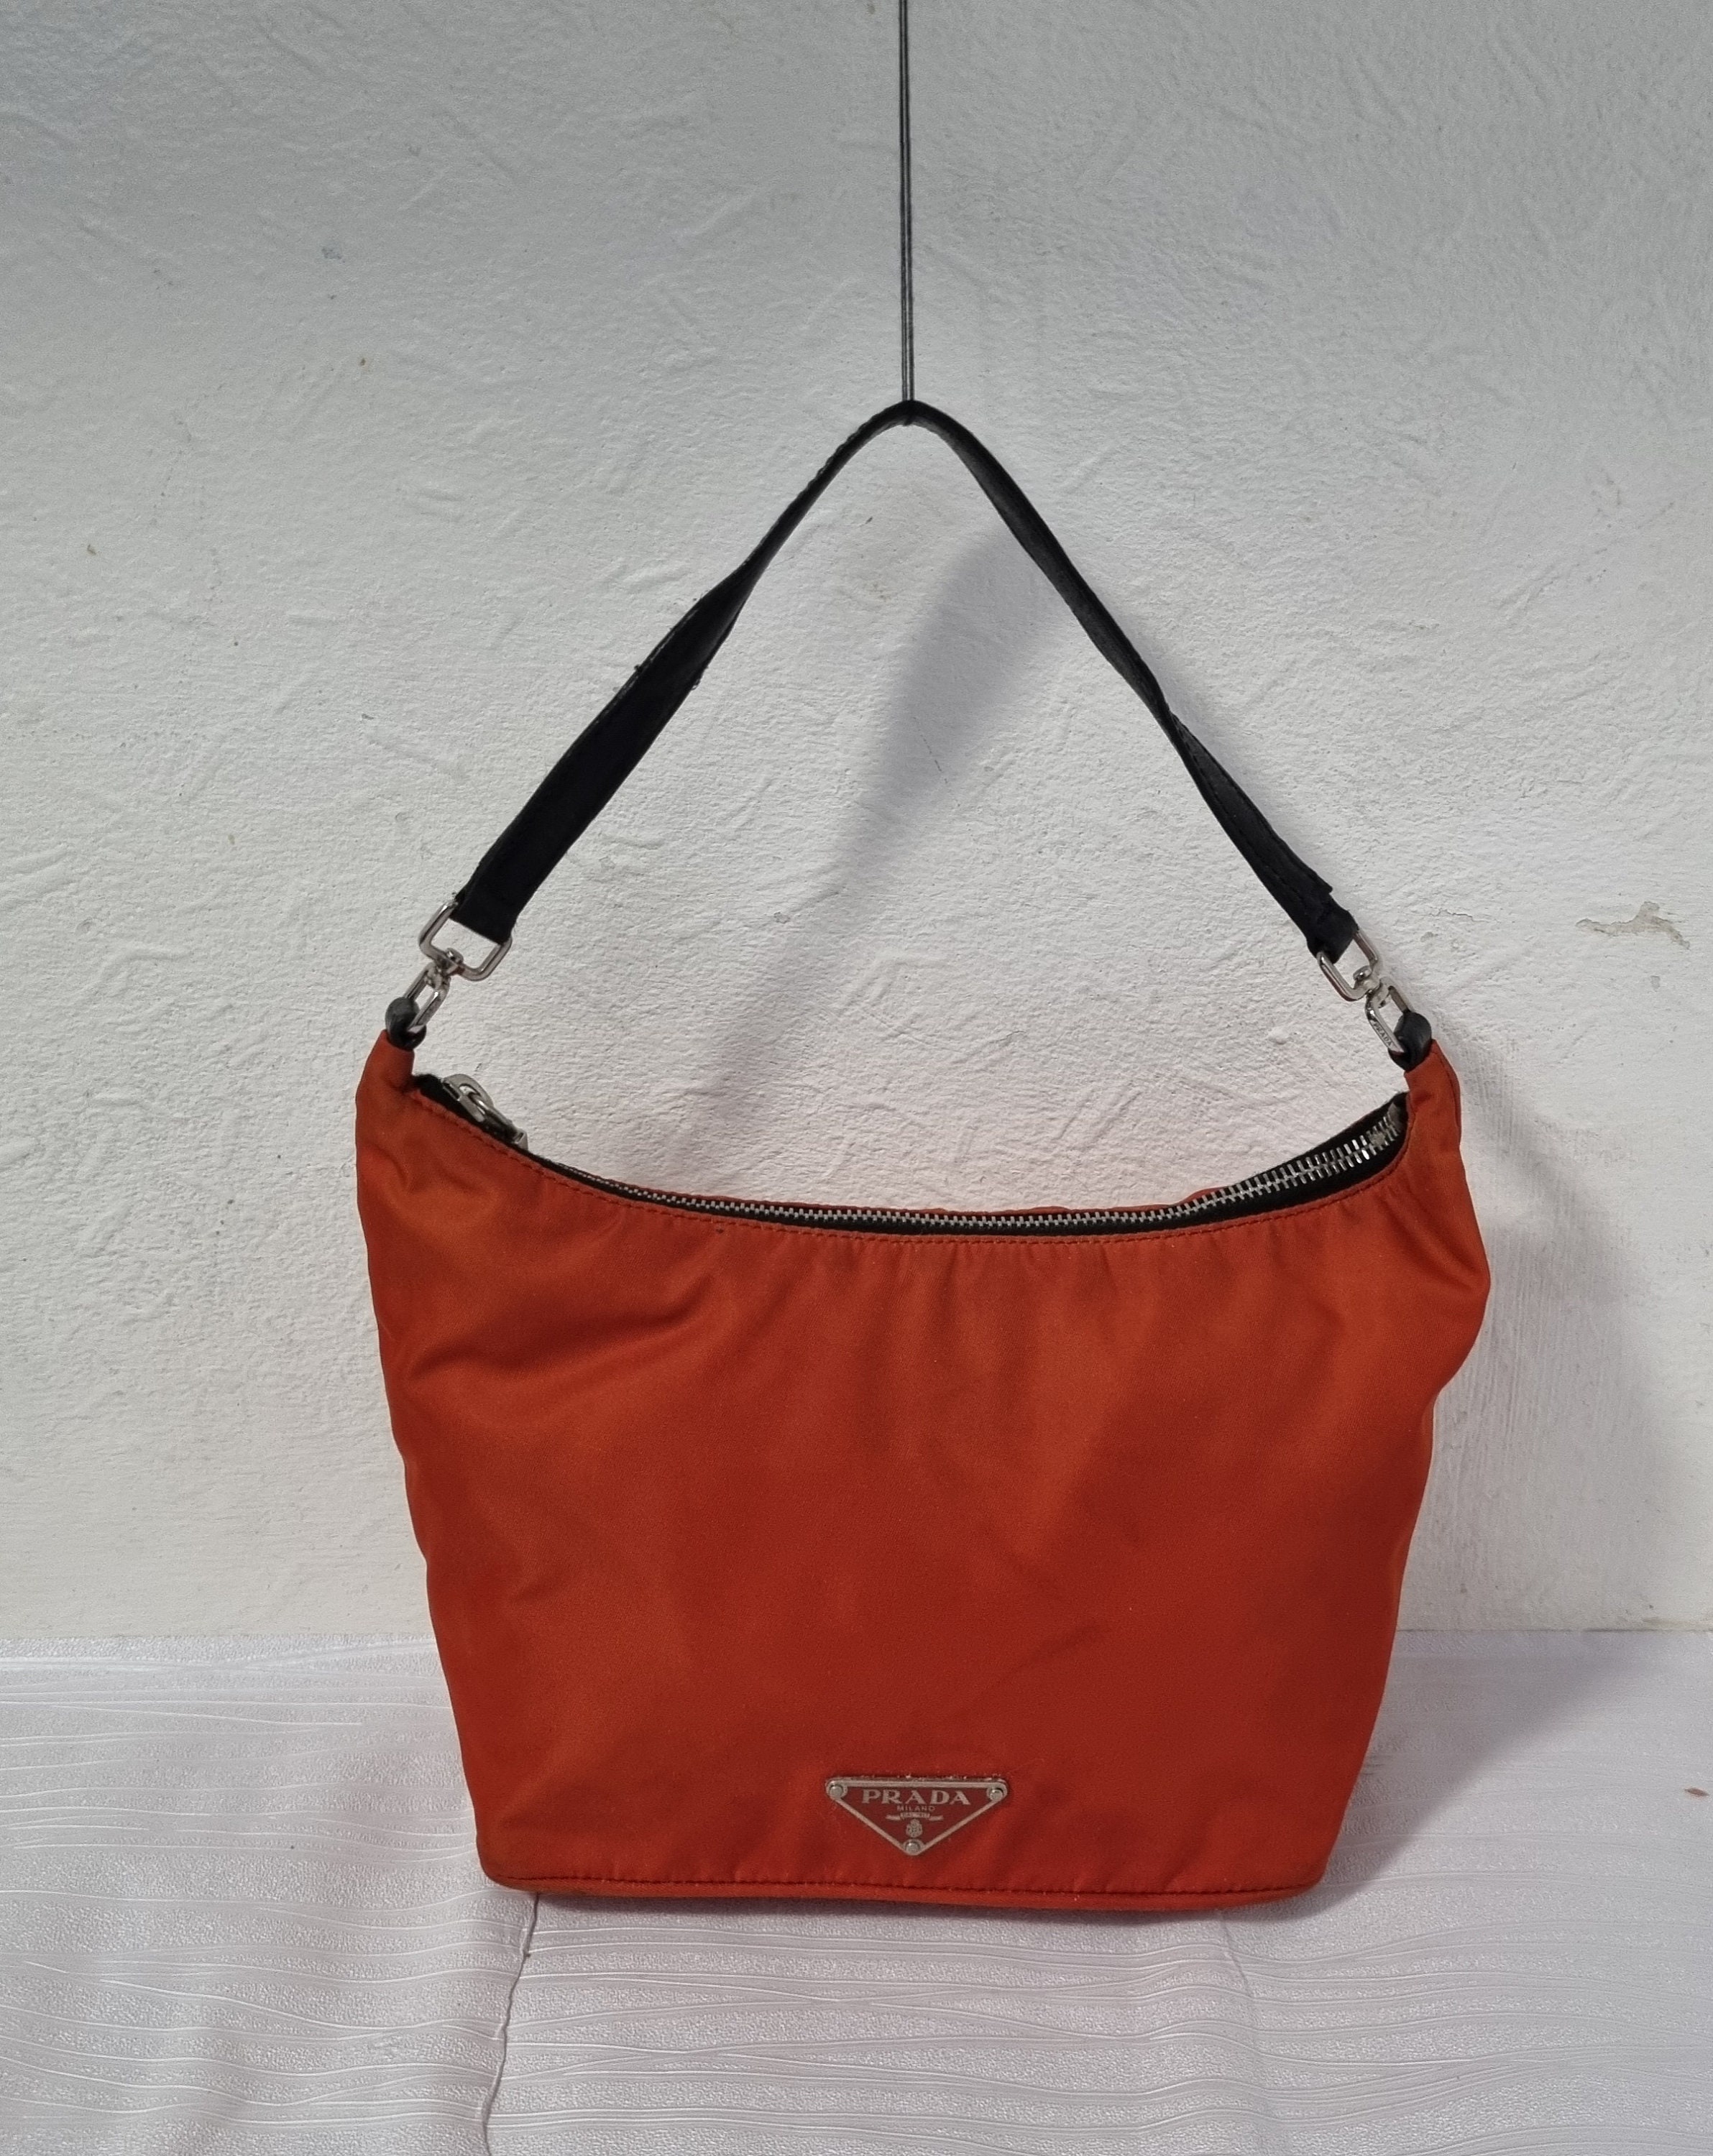 PRADA Mini Tessuto SIRIO Red Nylon Shoulder Bag With Authenticity Cards